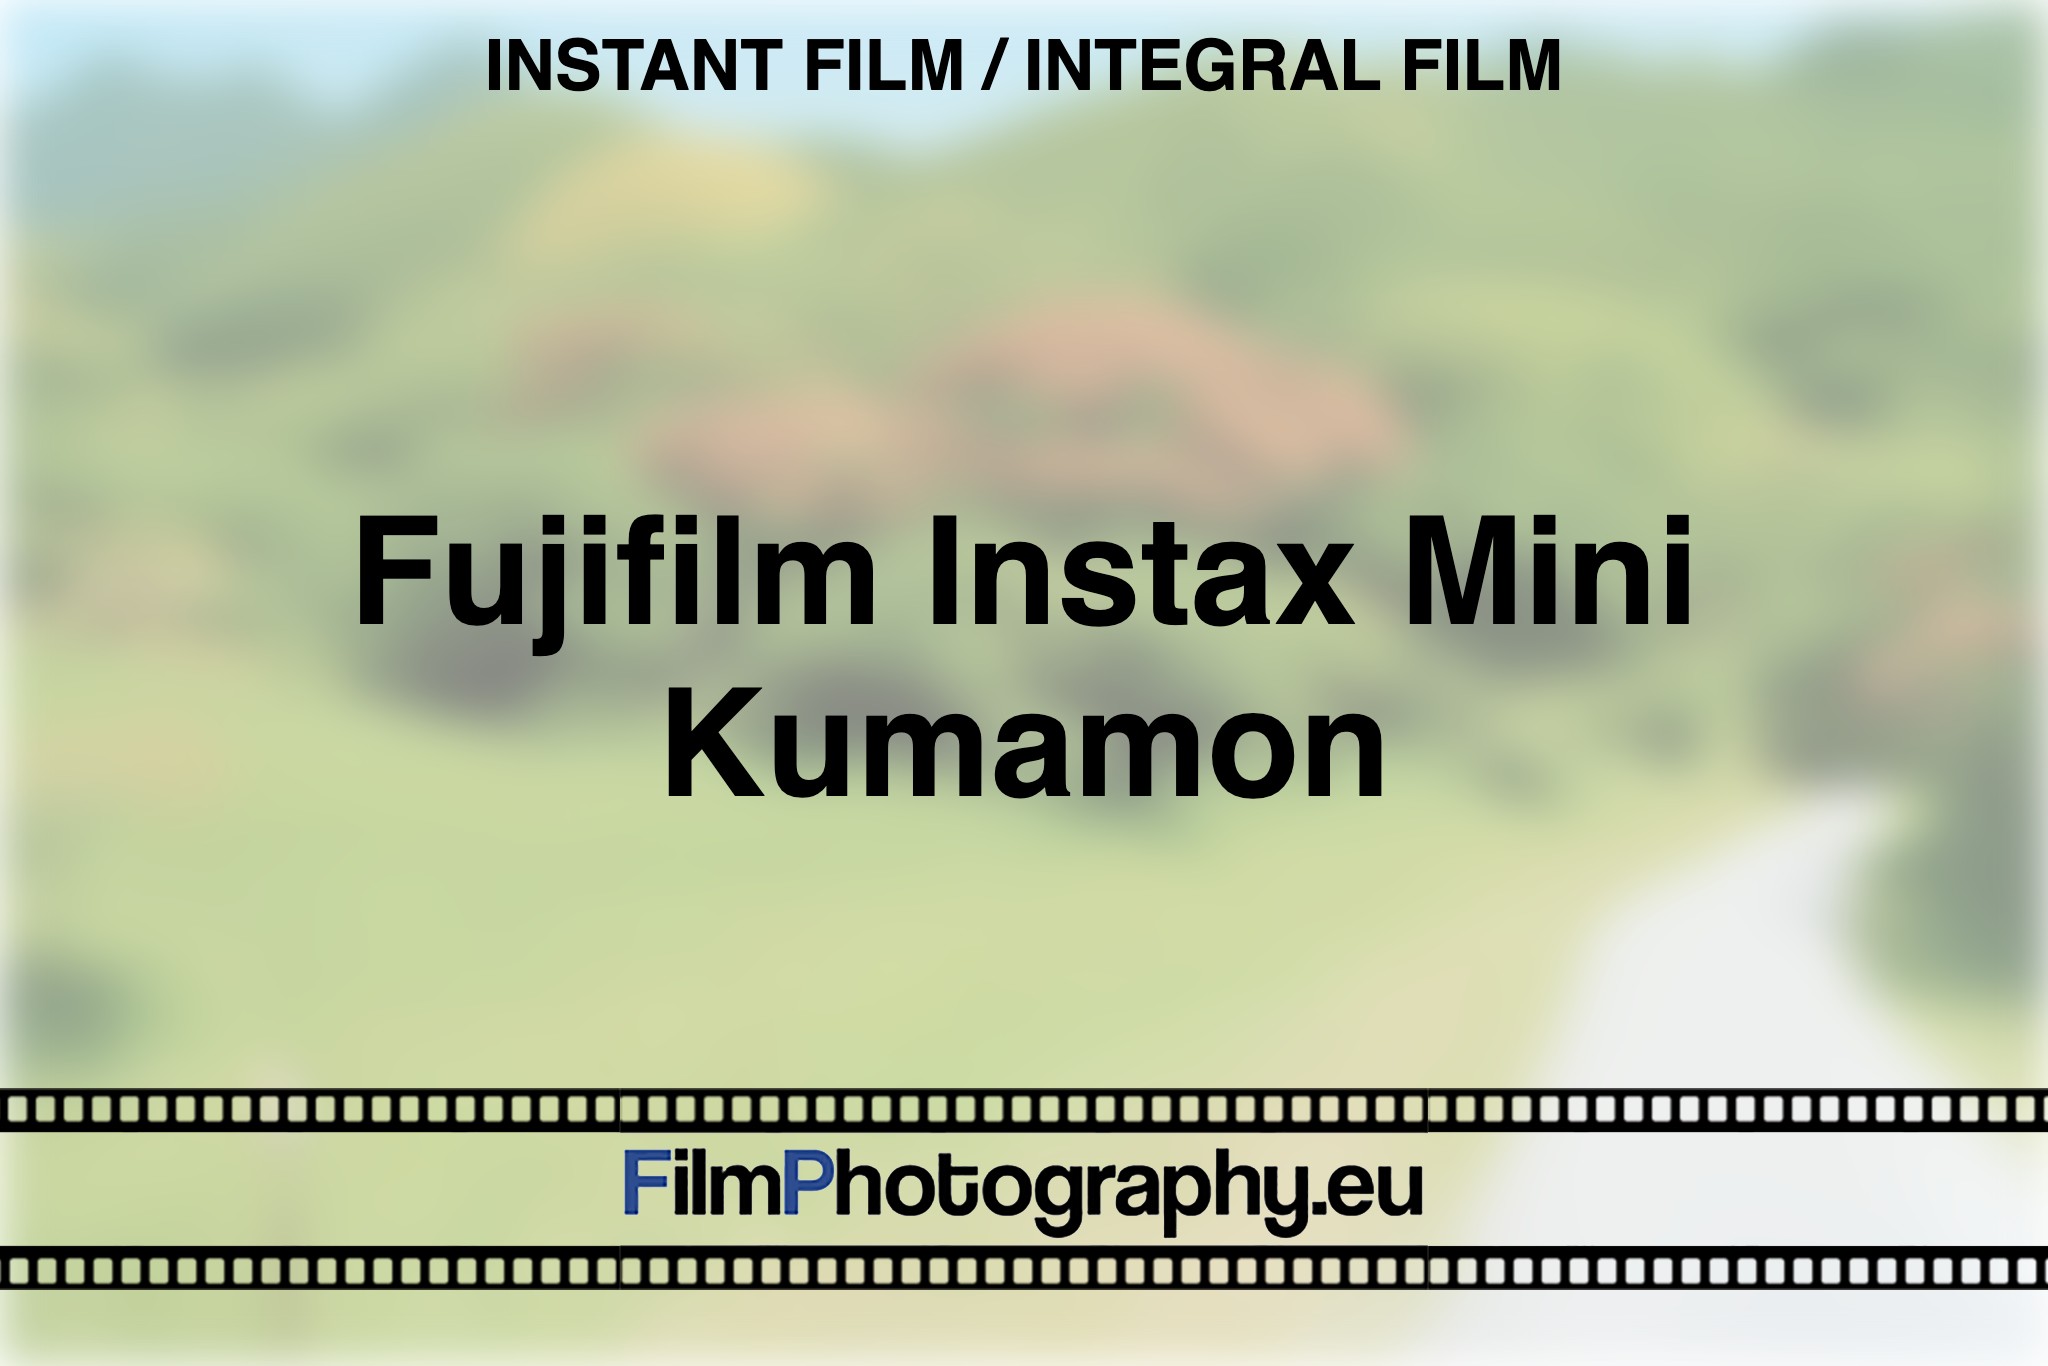 fujifilm-instax-mini-kumamon-instant-film-integral-film-bnv